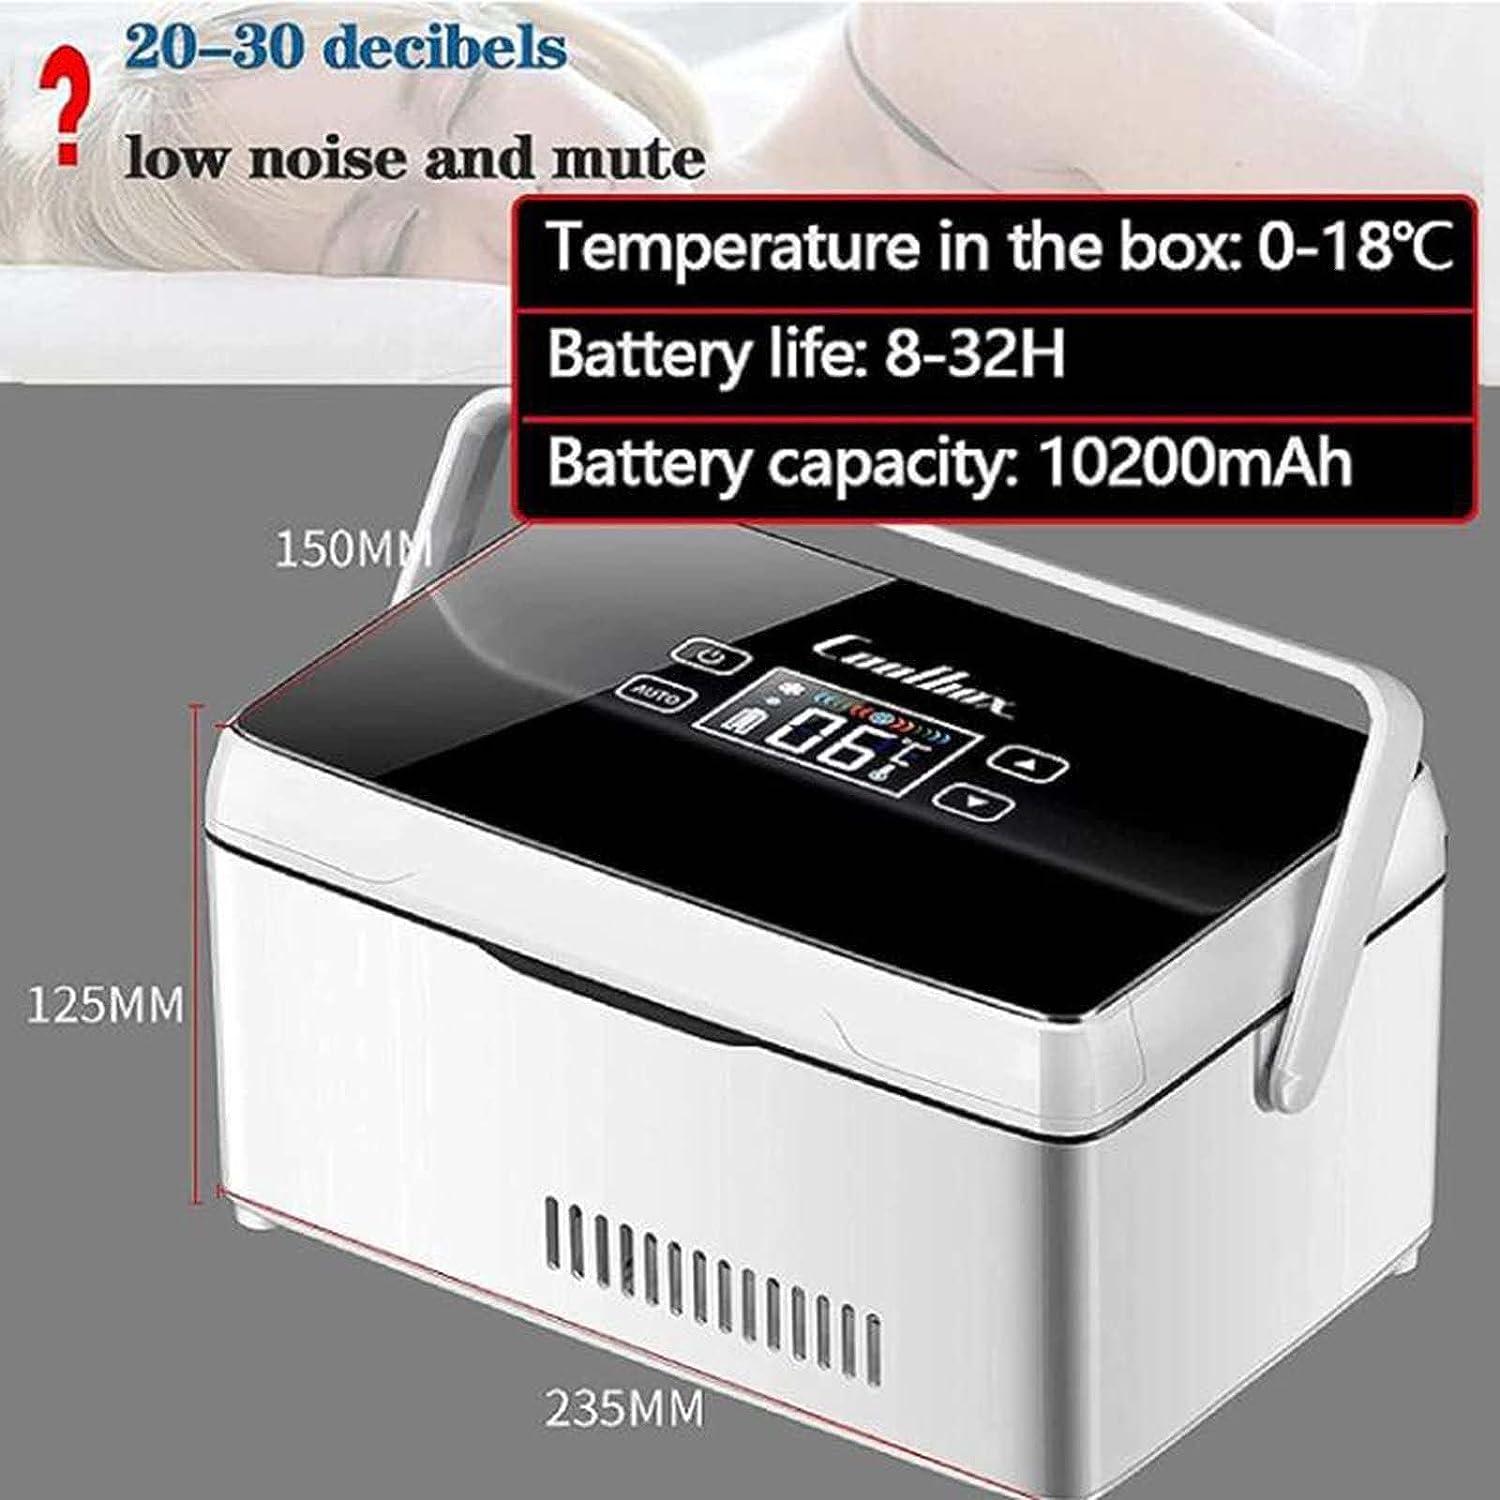 ZXLZM LED Display Mini Cool Box Car Cool Box Cool Box Electric